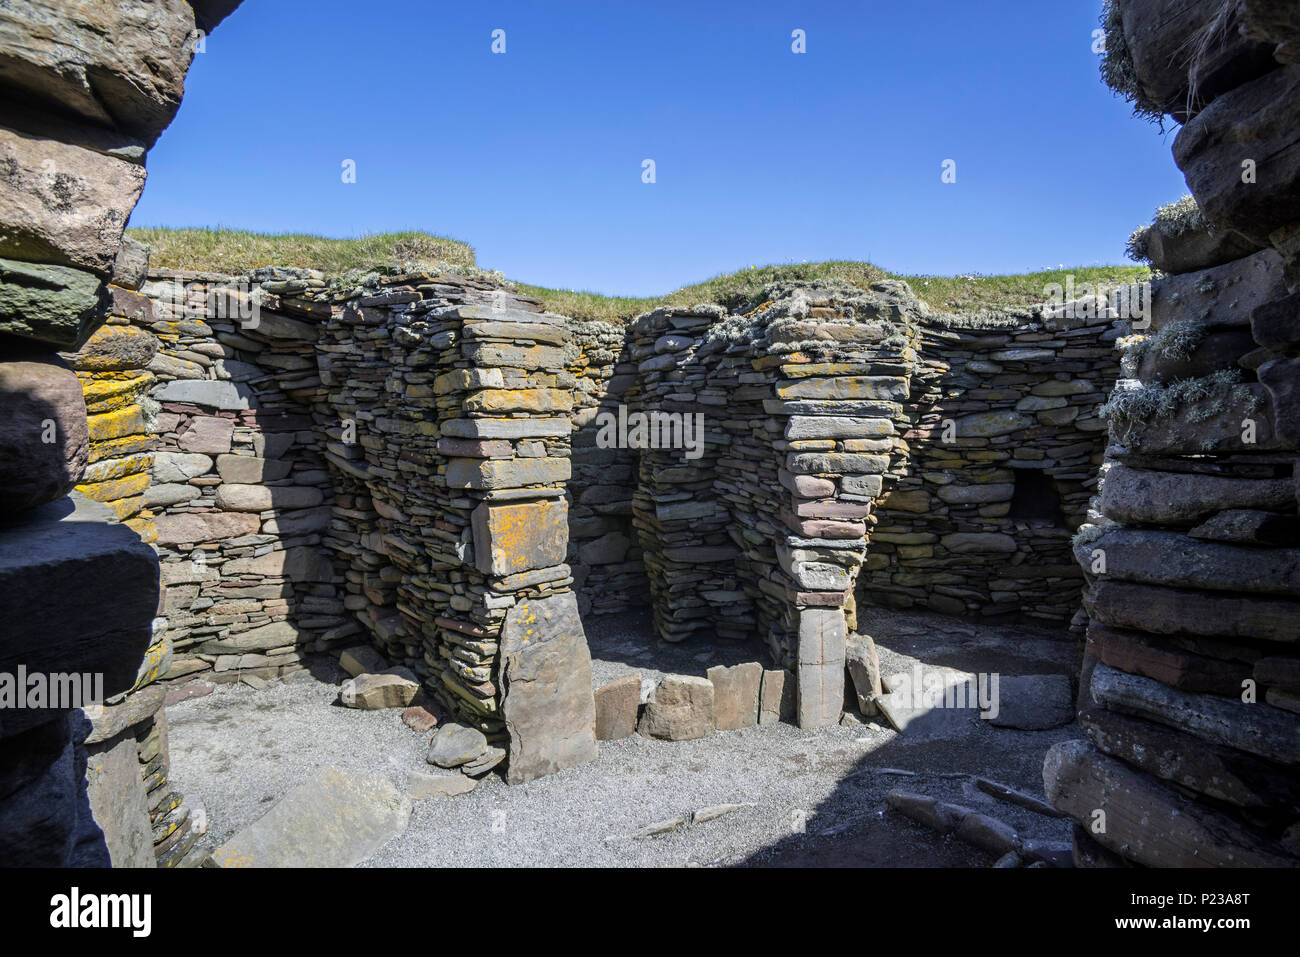 Interior of wheelhouse at Jarlshof, archaeological site showing prehistoric and Norse settlements at Sumburgh Head, Shetland Islands, Scotland, UK Stock Photo